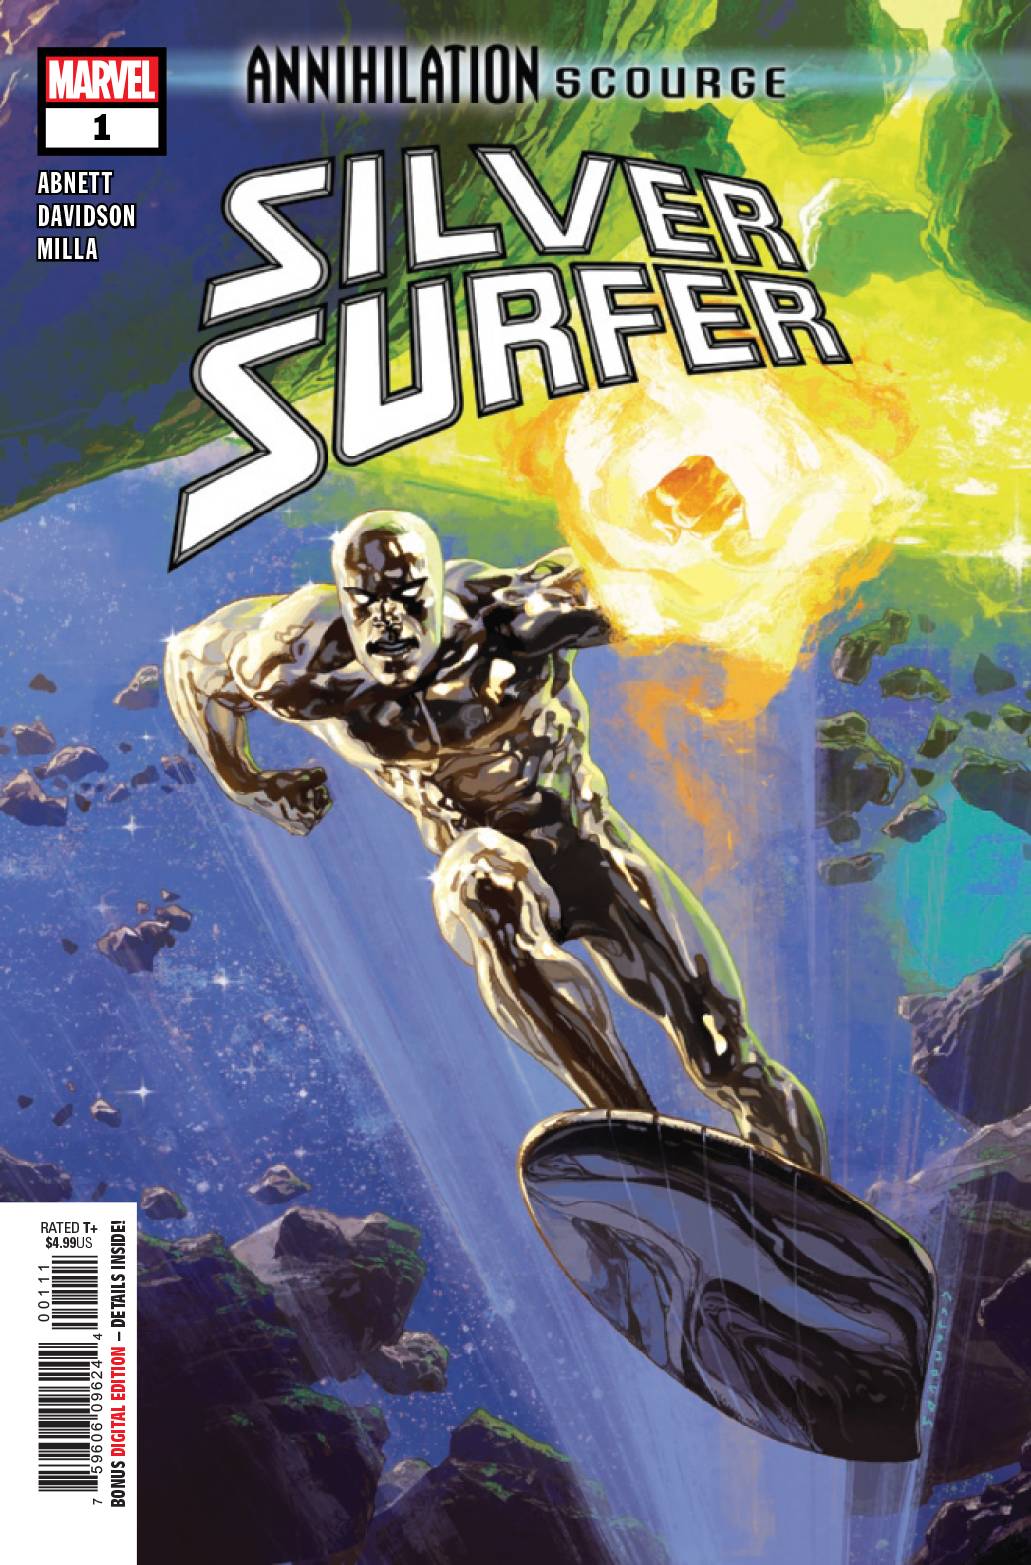 Annihilation-Scourge: Silver Surfer #1 (2019)